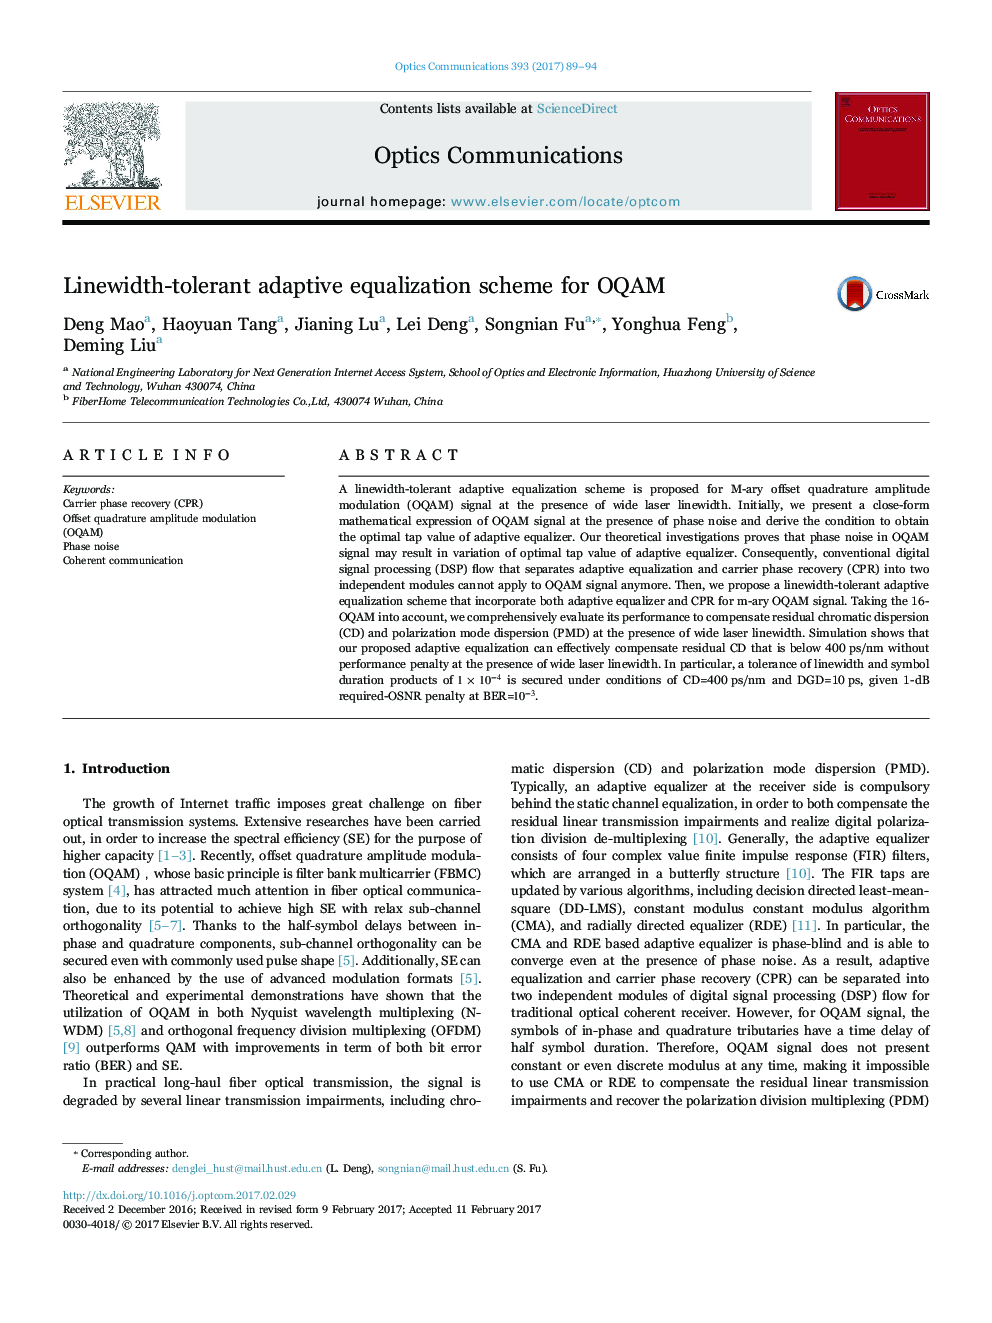 Linewidth-tolerant adaptive equalization scheme for OQAM